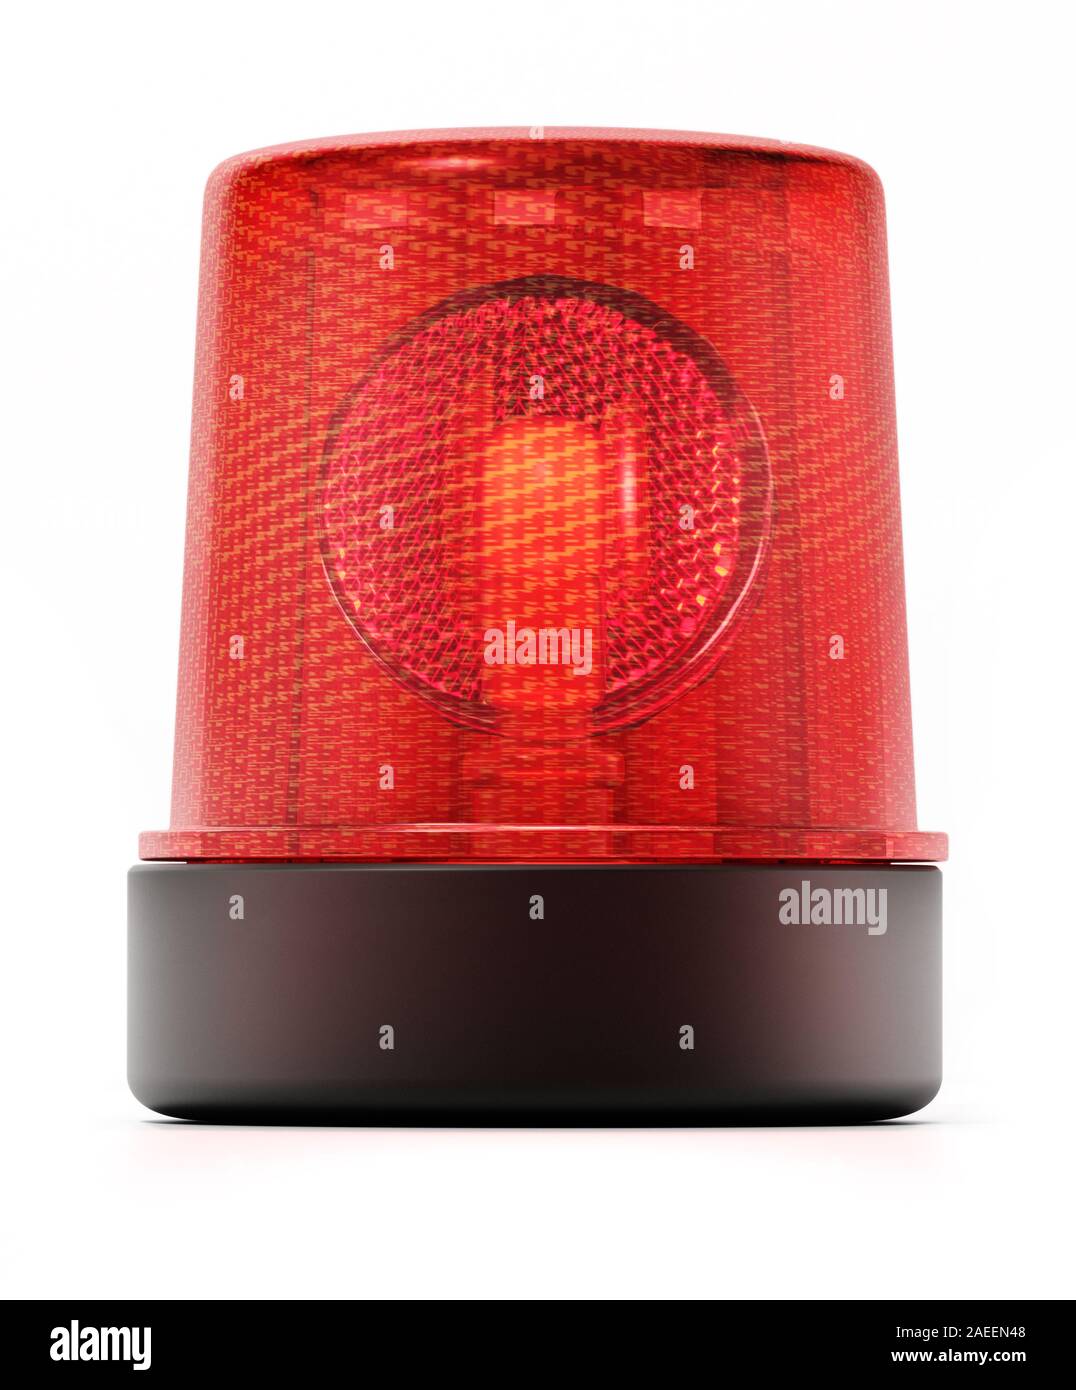 Flashing red alarm light isolated on white background. 3D illustration. Stock Photo